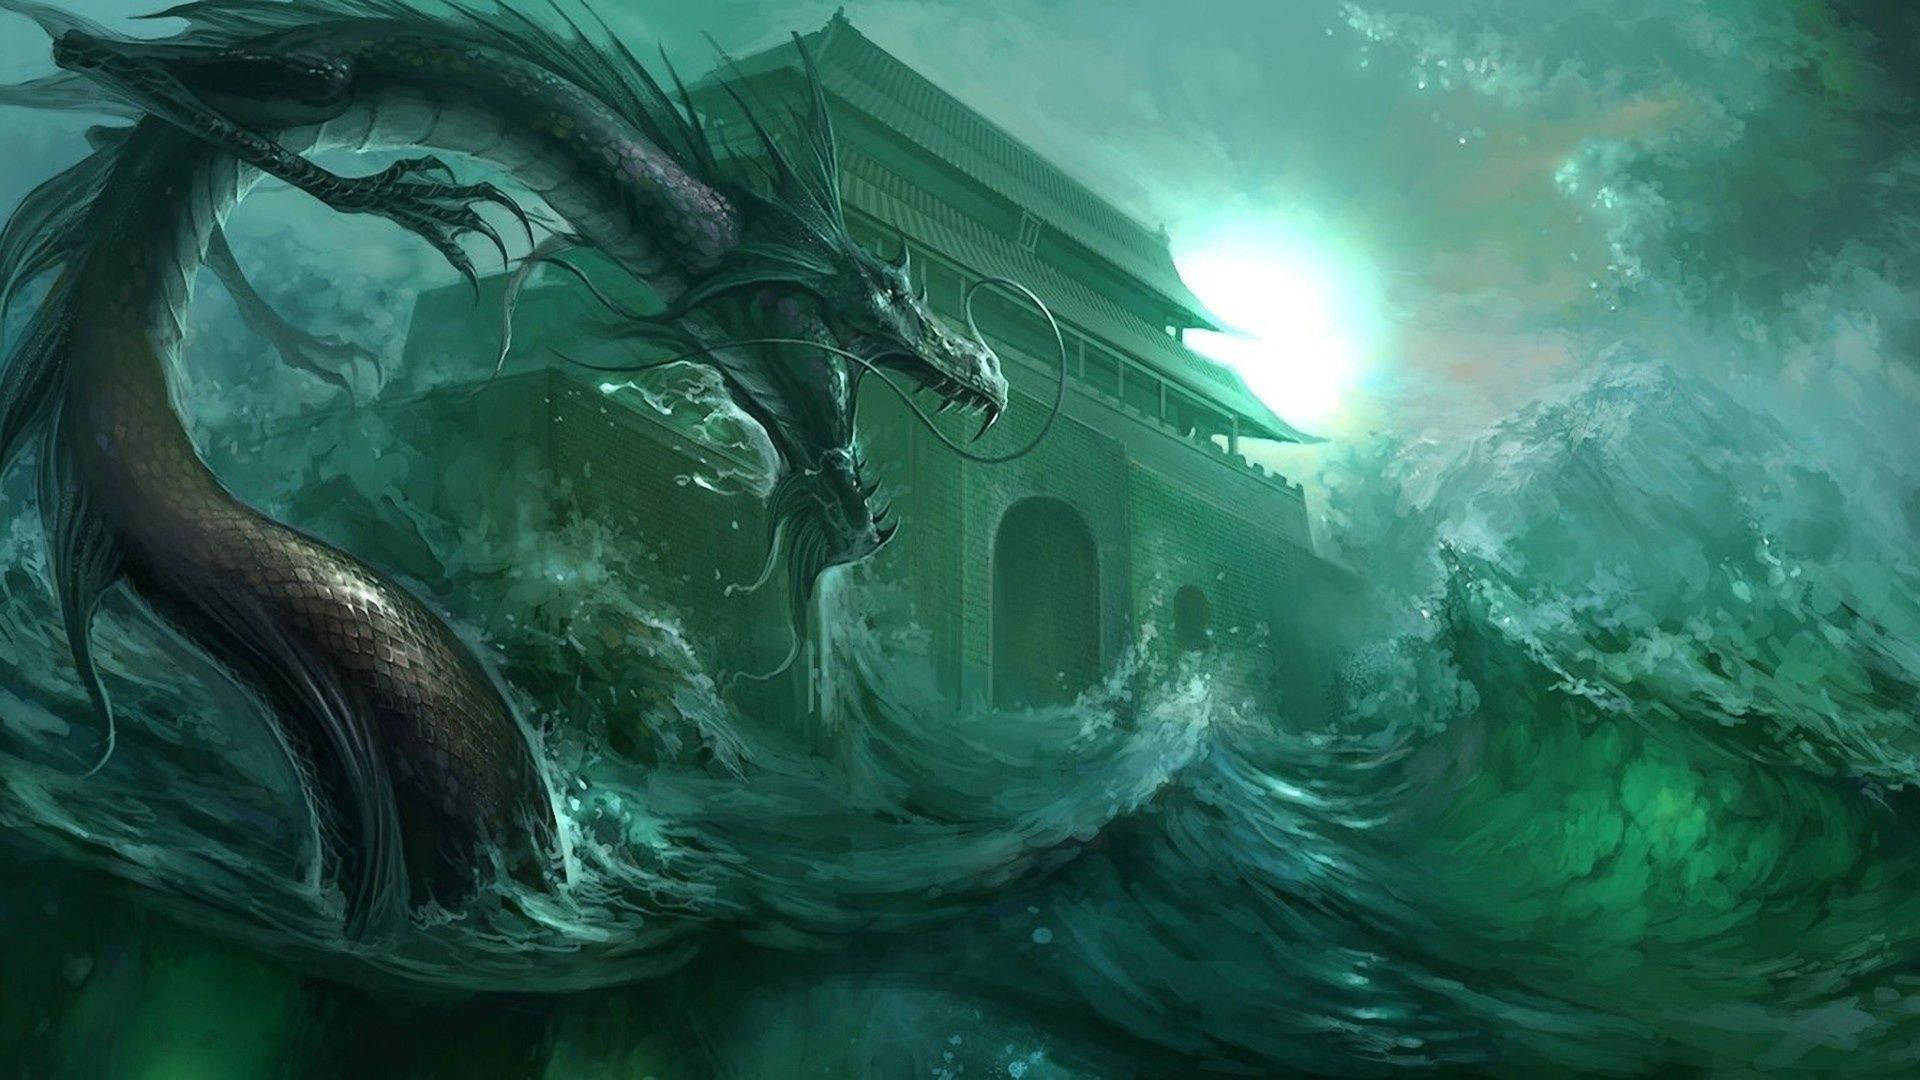 Eastern Dragon Raging Waves